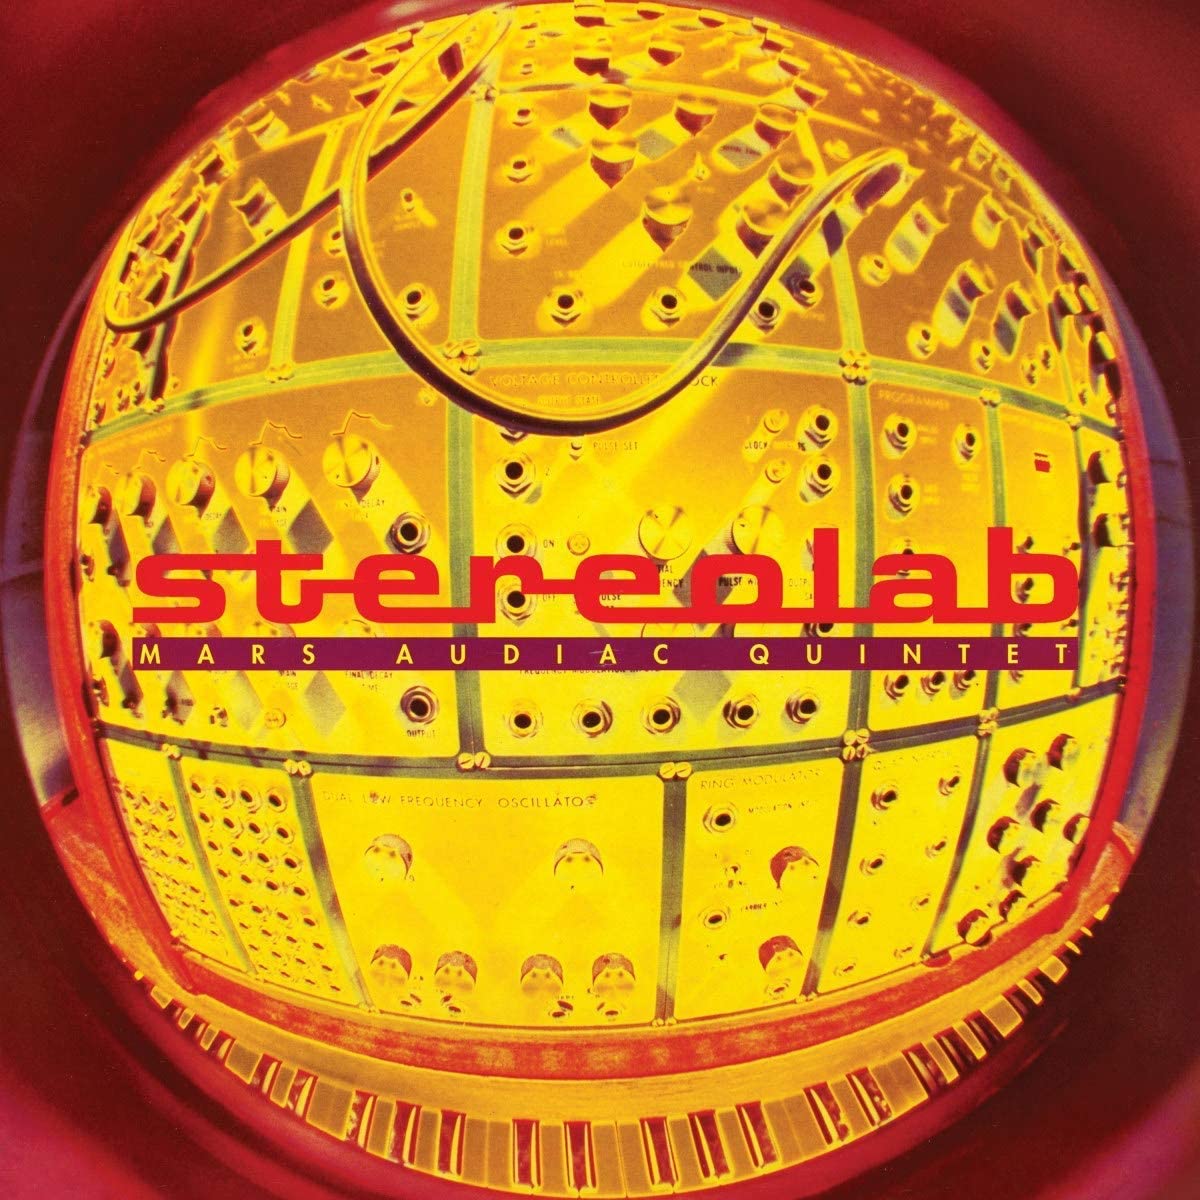 Stereolab - Mars Audiac Quintet Expanded Edition (Vinyl 3LP)